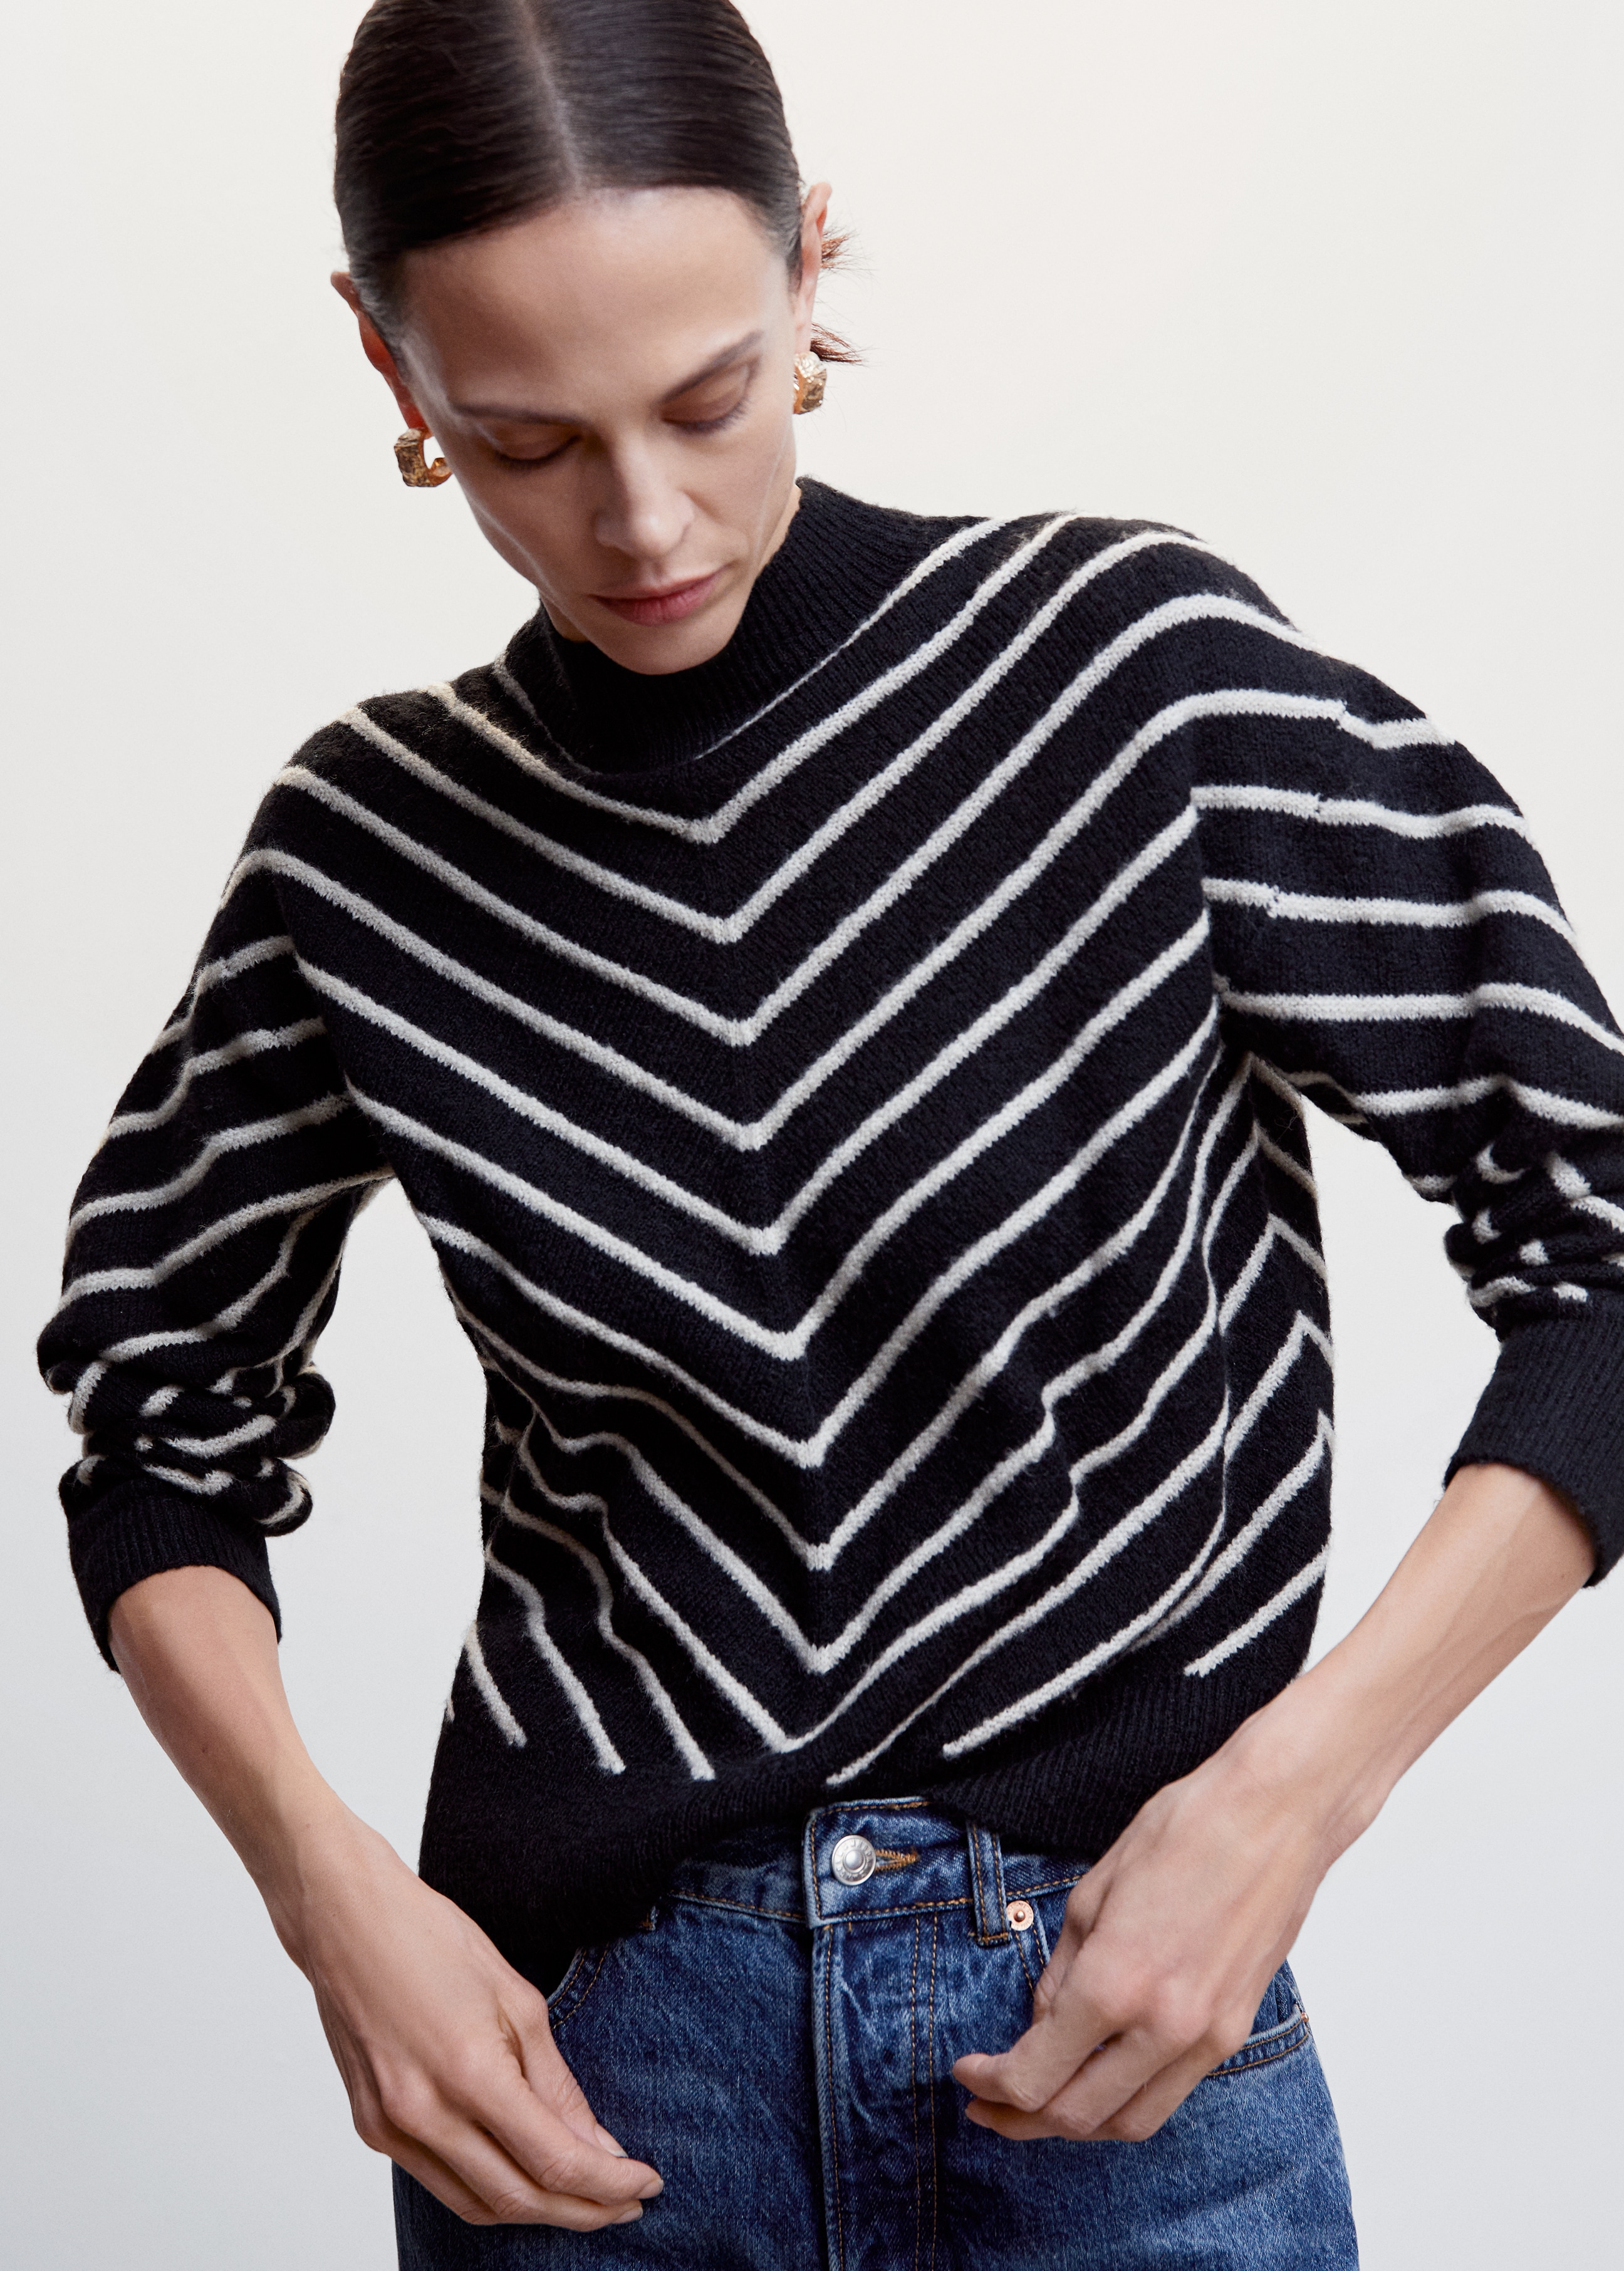 Stripe-print sweater with Perkins neck - Medium plane